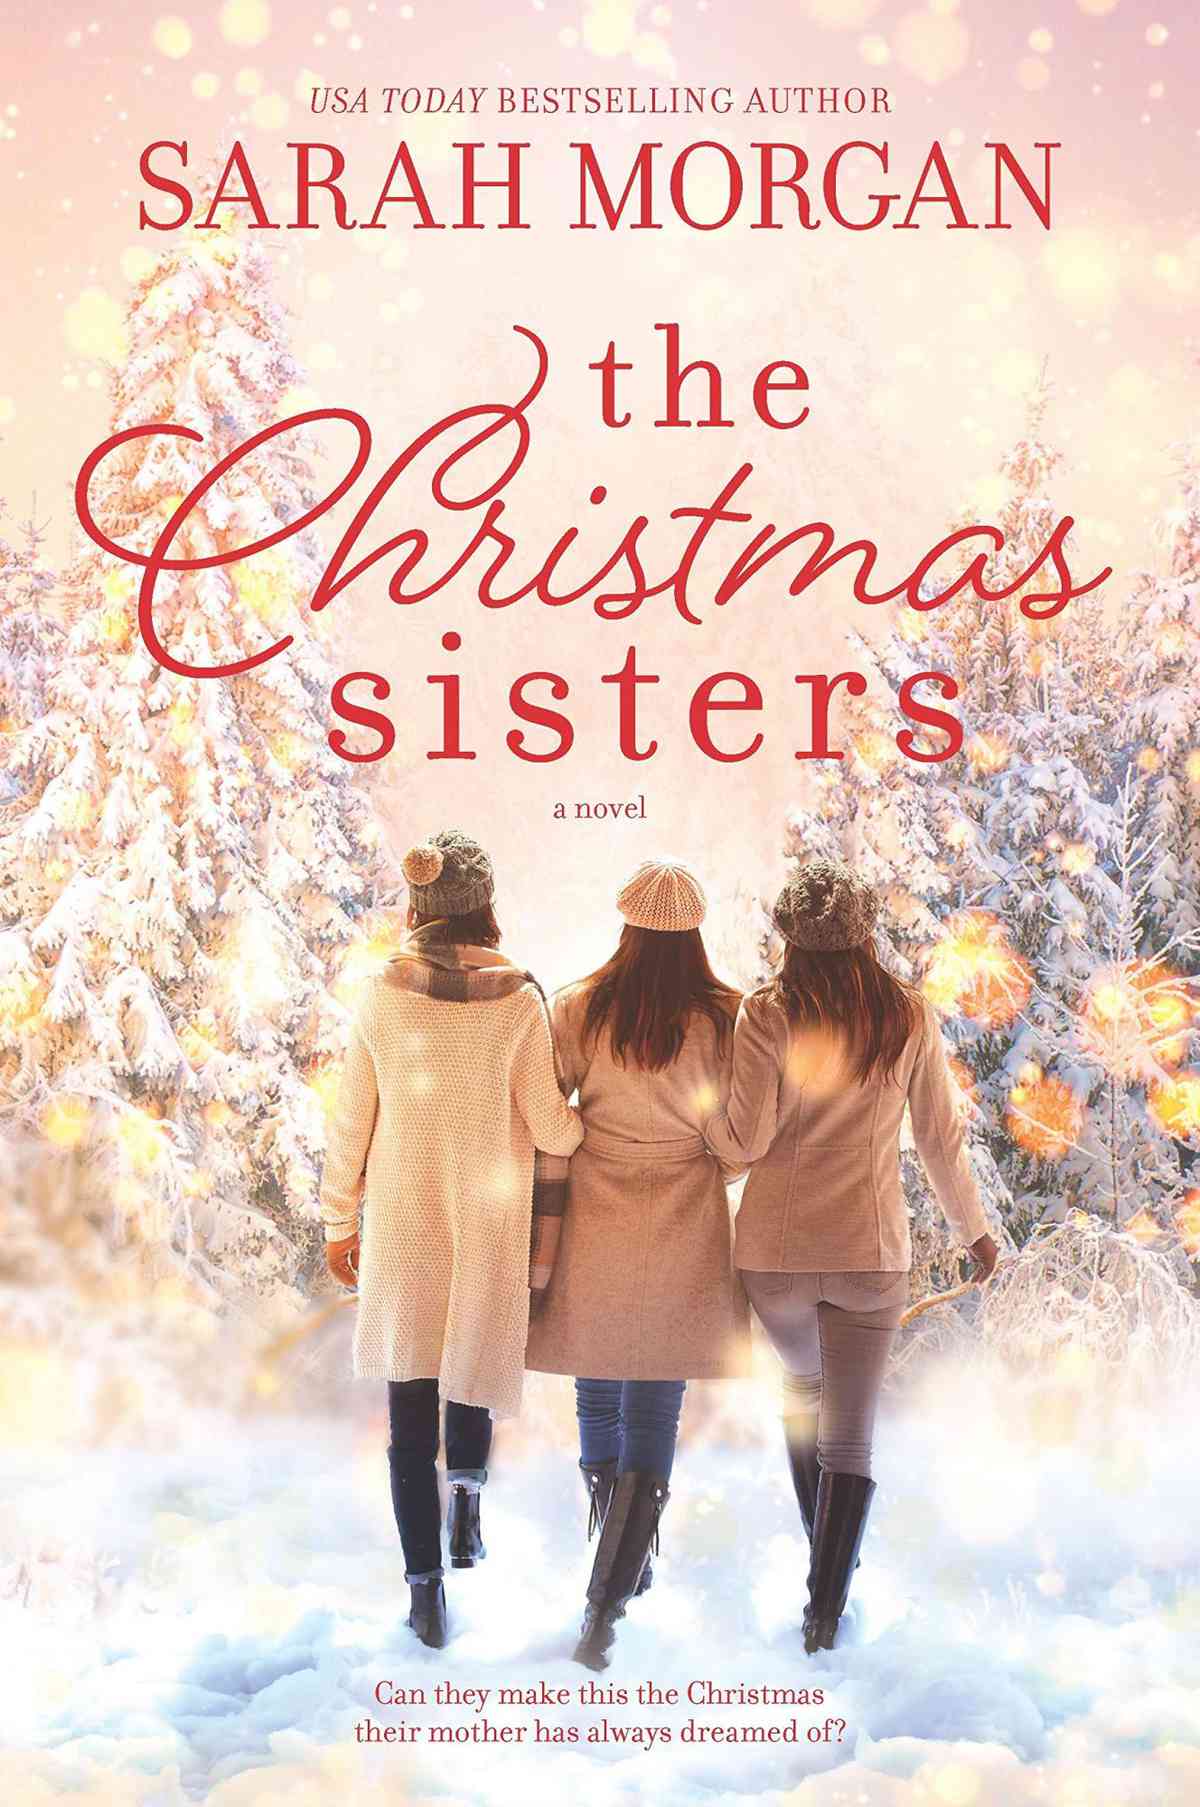 The Christmas Sisters by Sarah Morgan